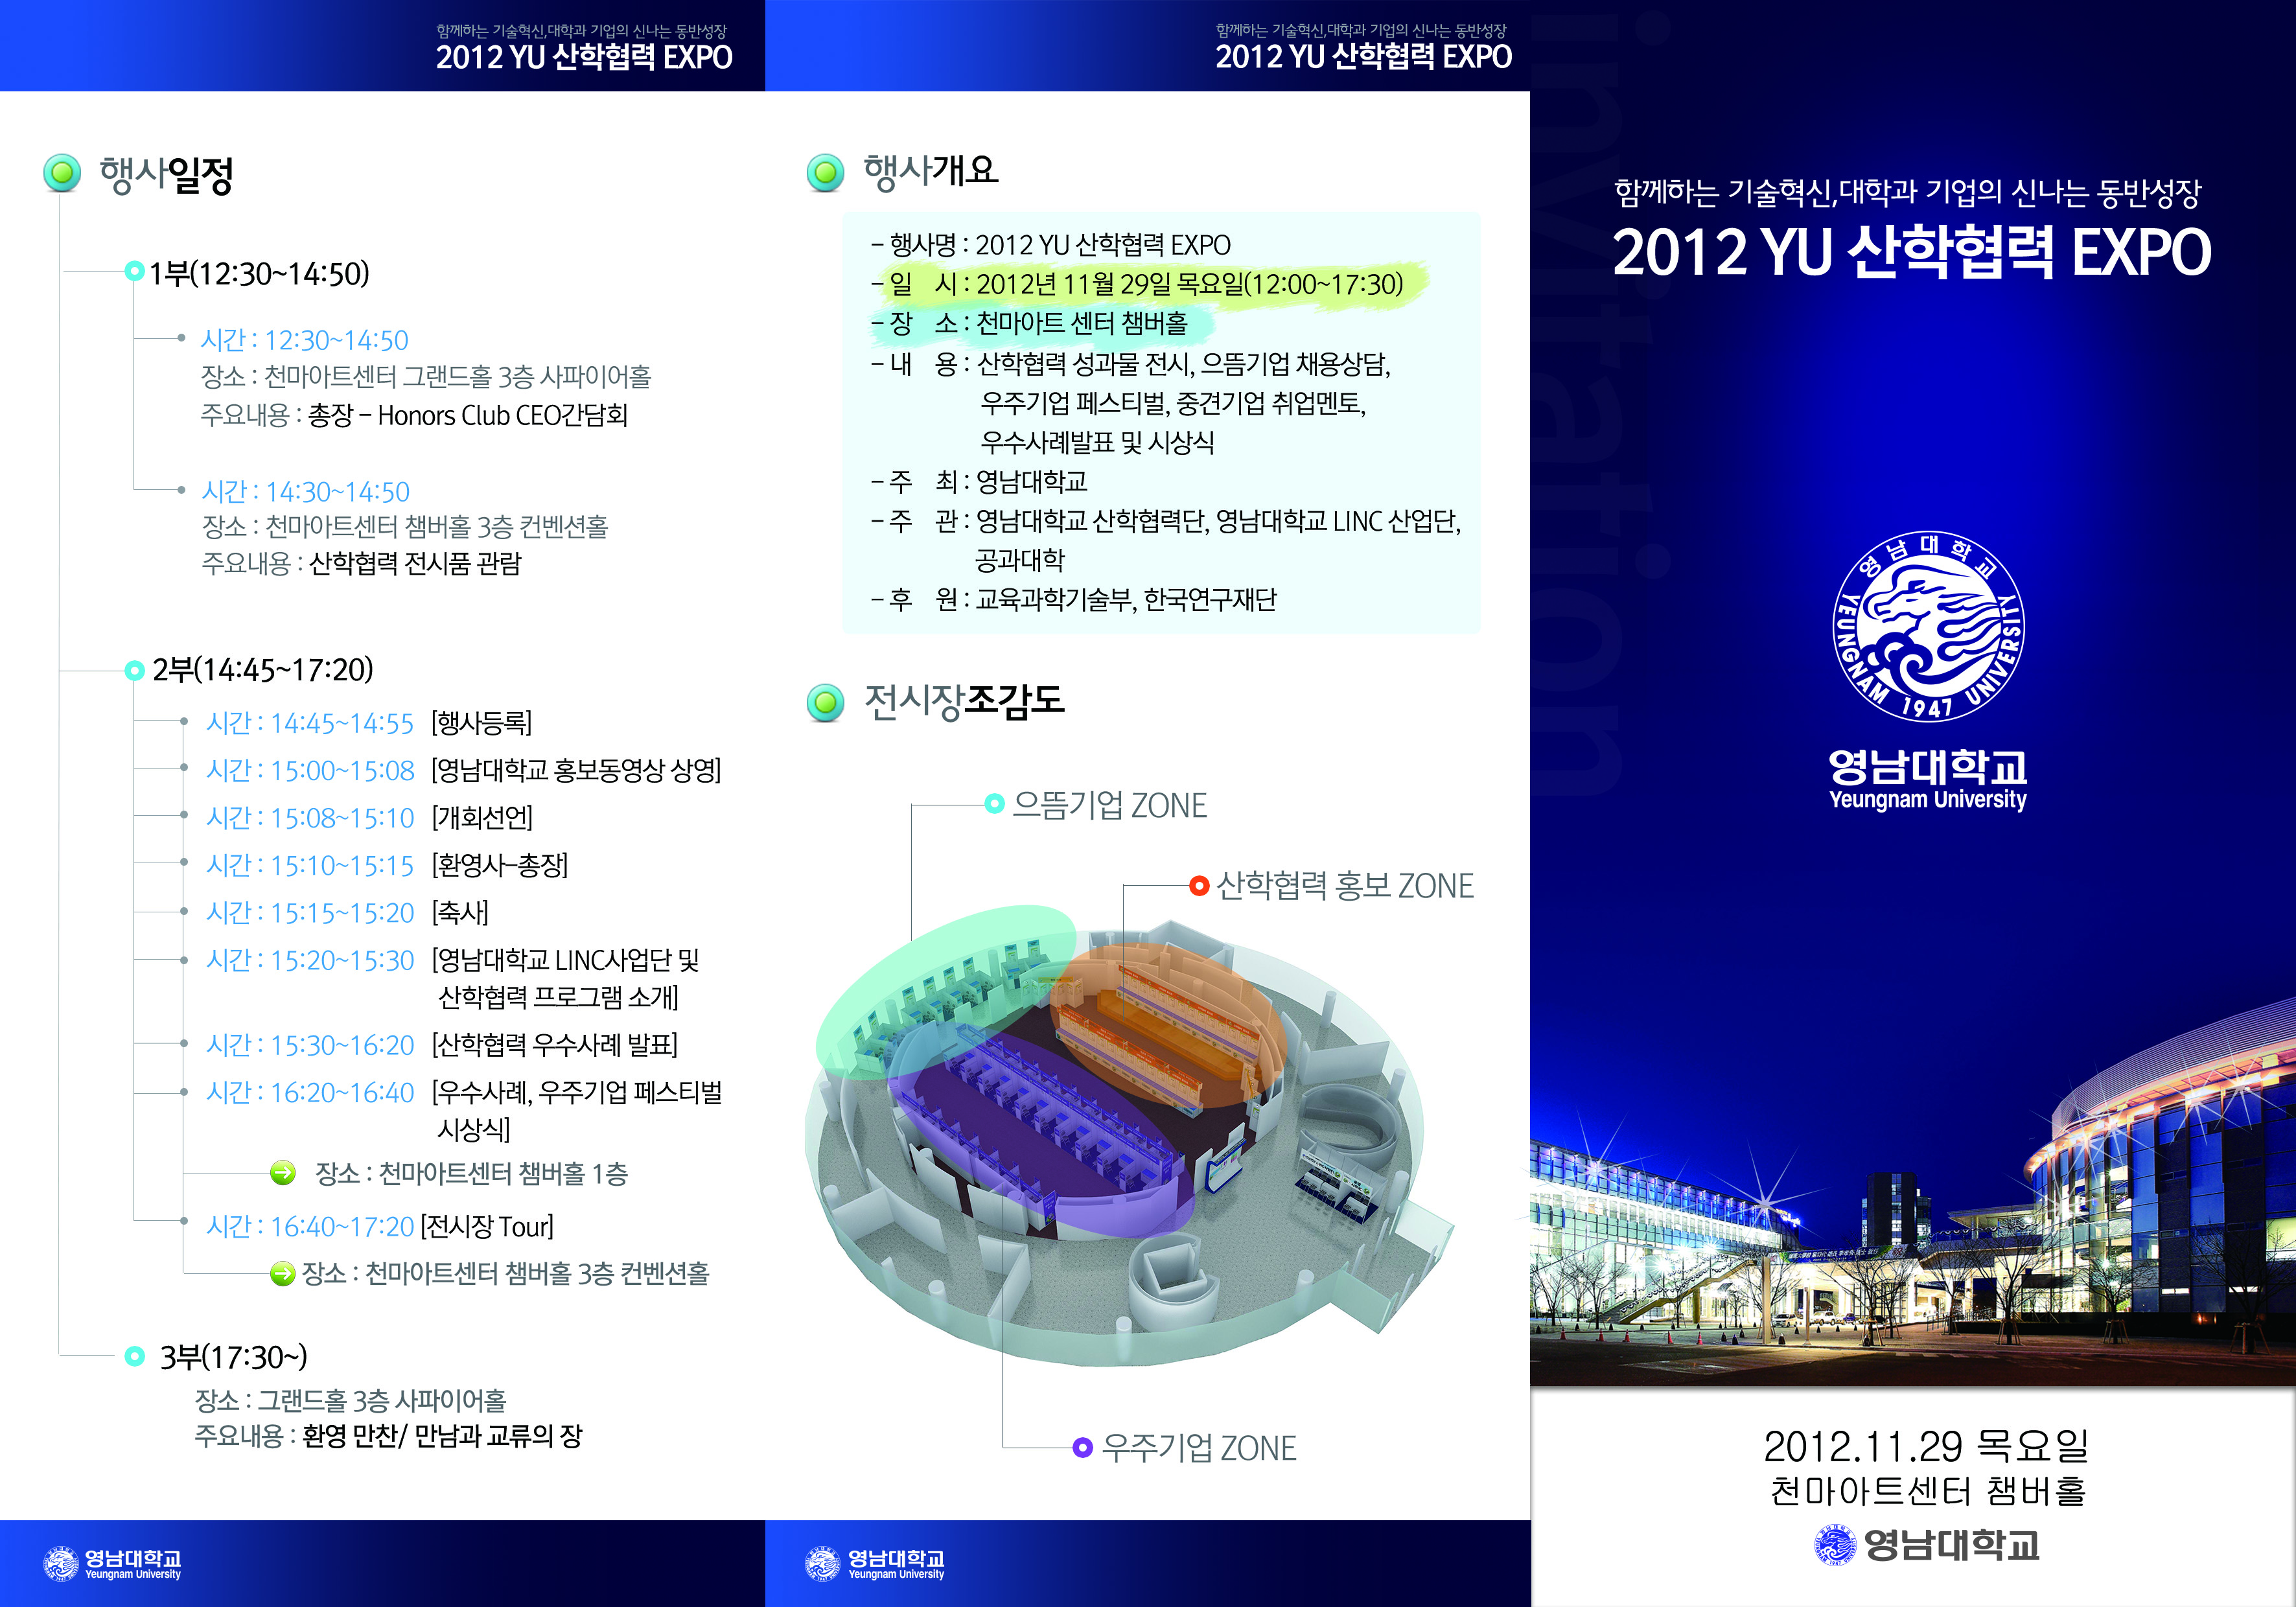 2012 YU 산학협력 EXPO 개최 안내 - 11/29(목), 천마아트센터, 많은 참석 부탁드립니다.